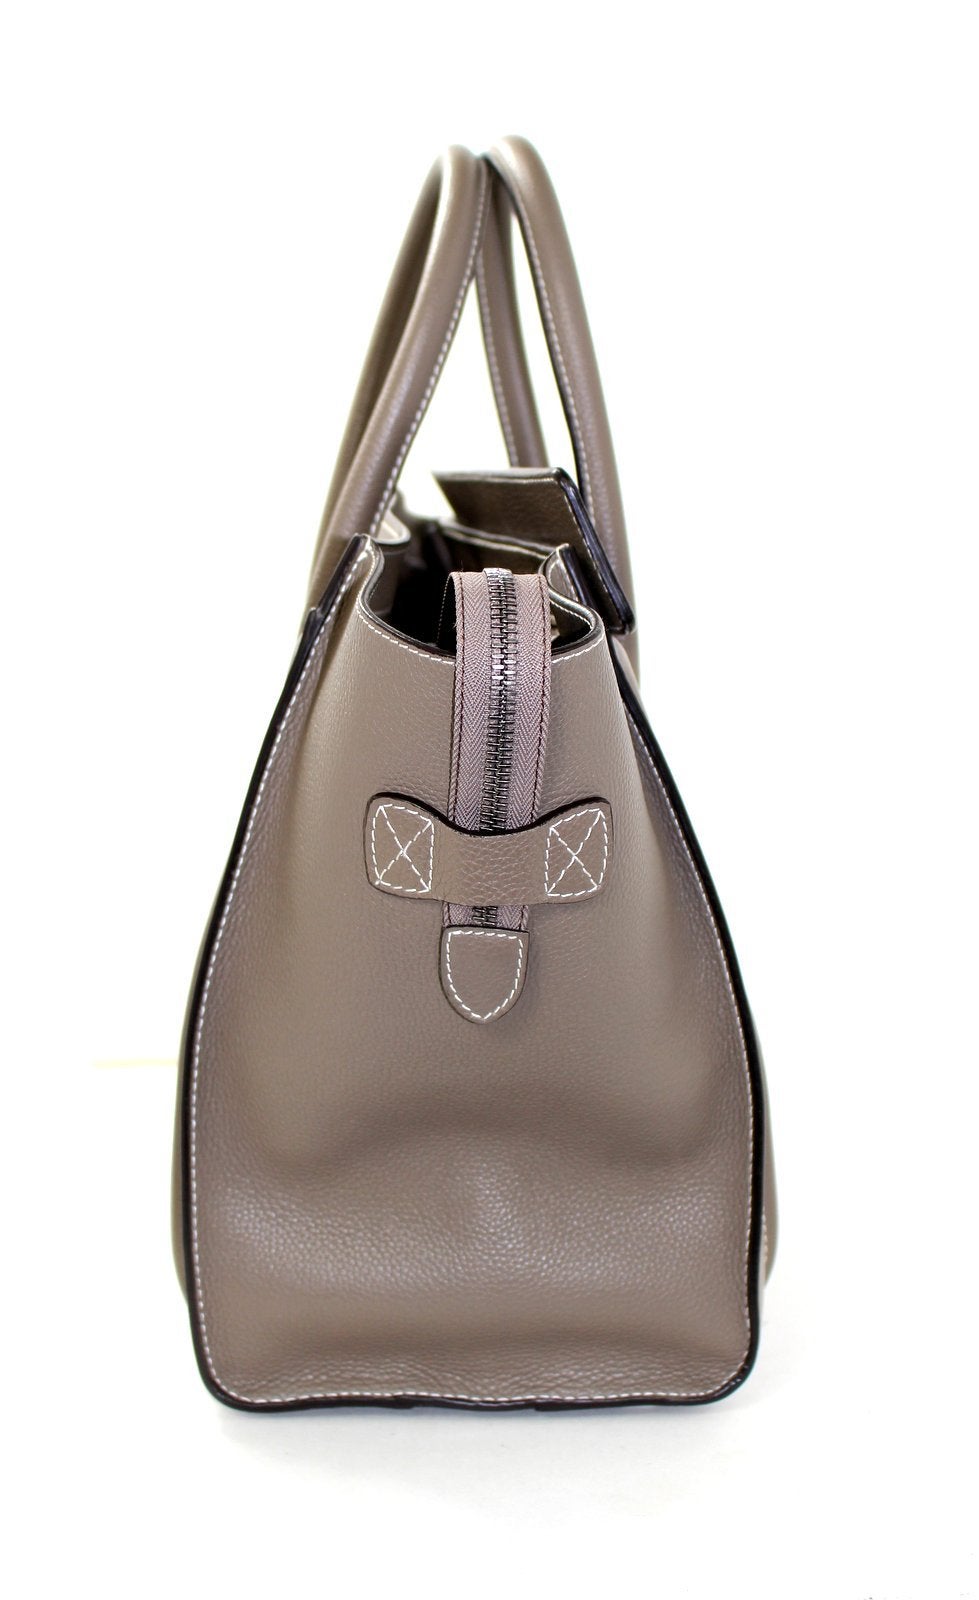 celine pink mini luggage - celine bag taupe, celine handbags online shop usa